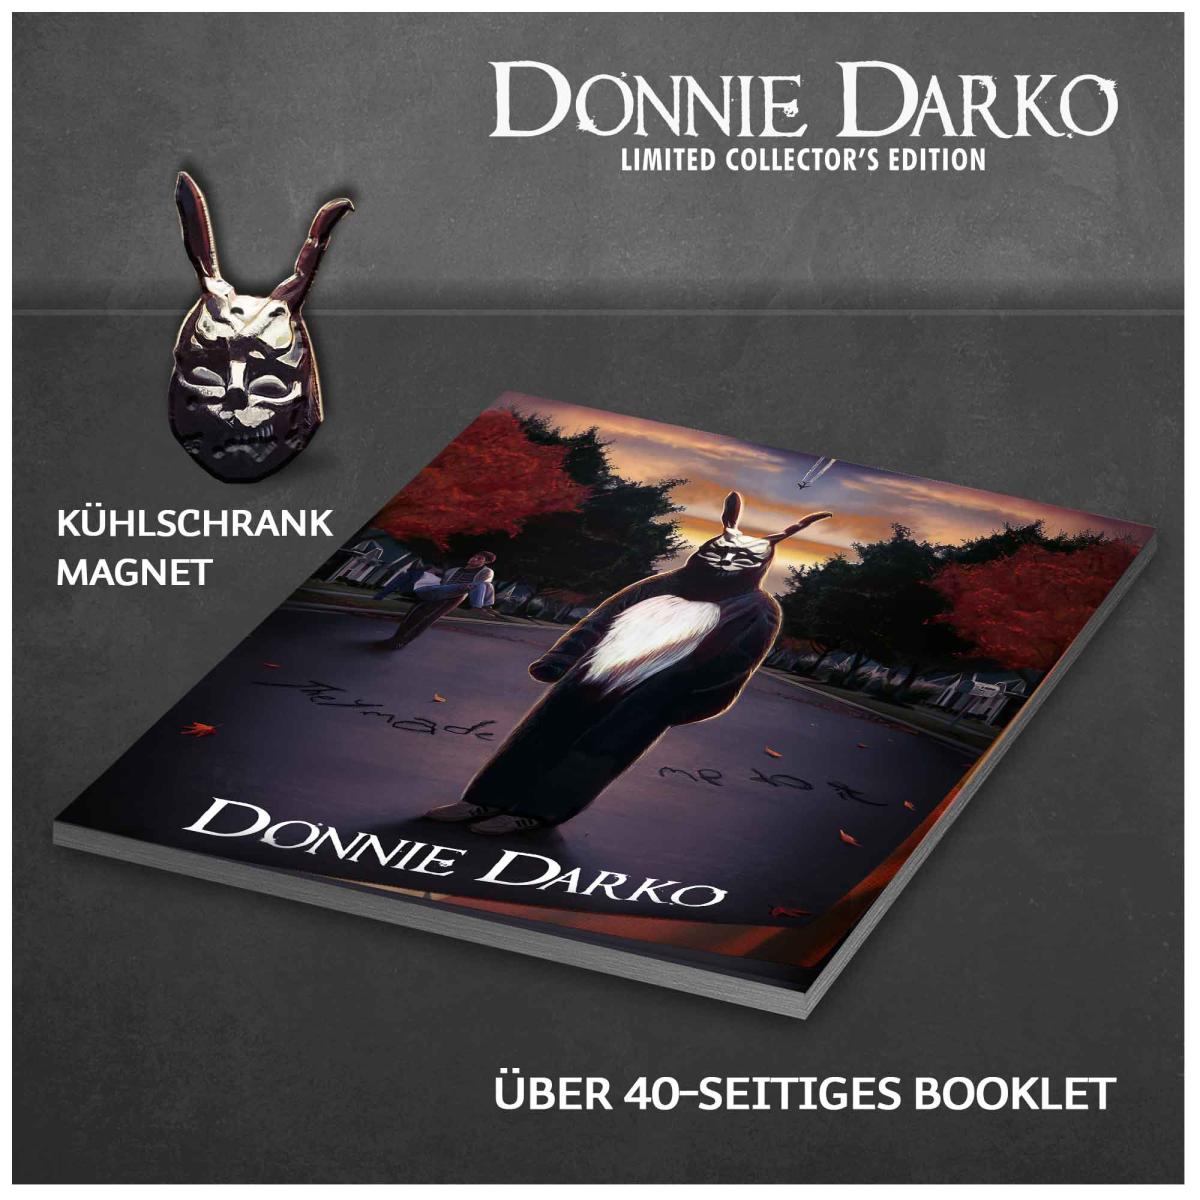 Artwork by Studio Canal – Donnie Darko Collector’s Edition